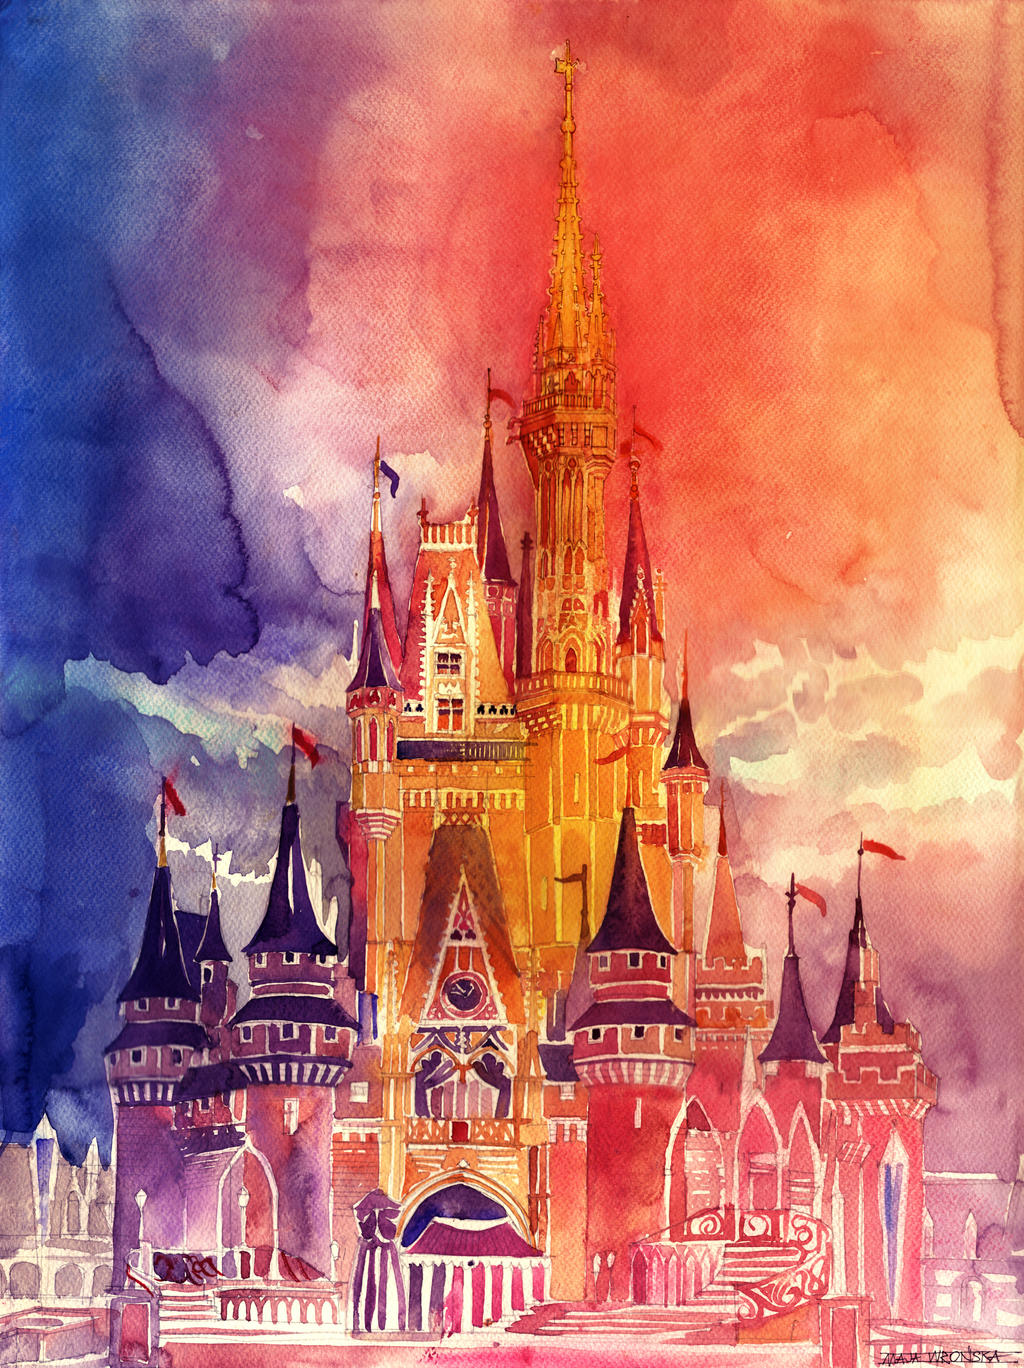 Cinderella Castle by takmaj on DeviantArt